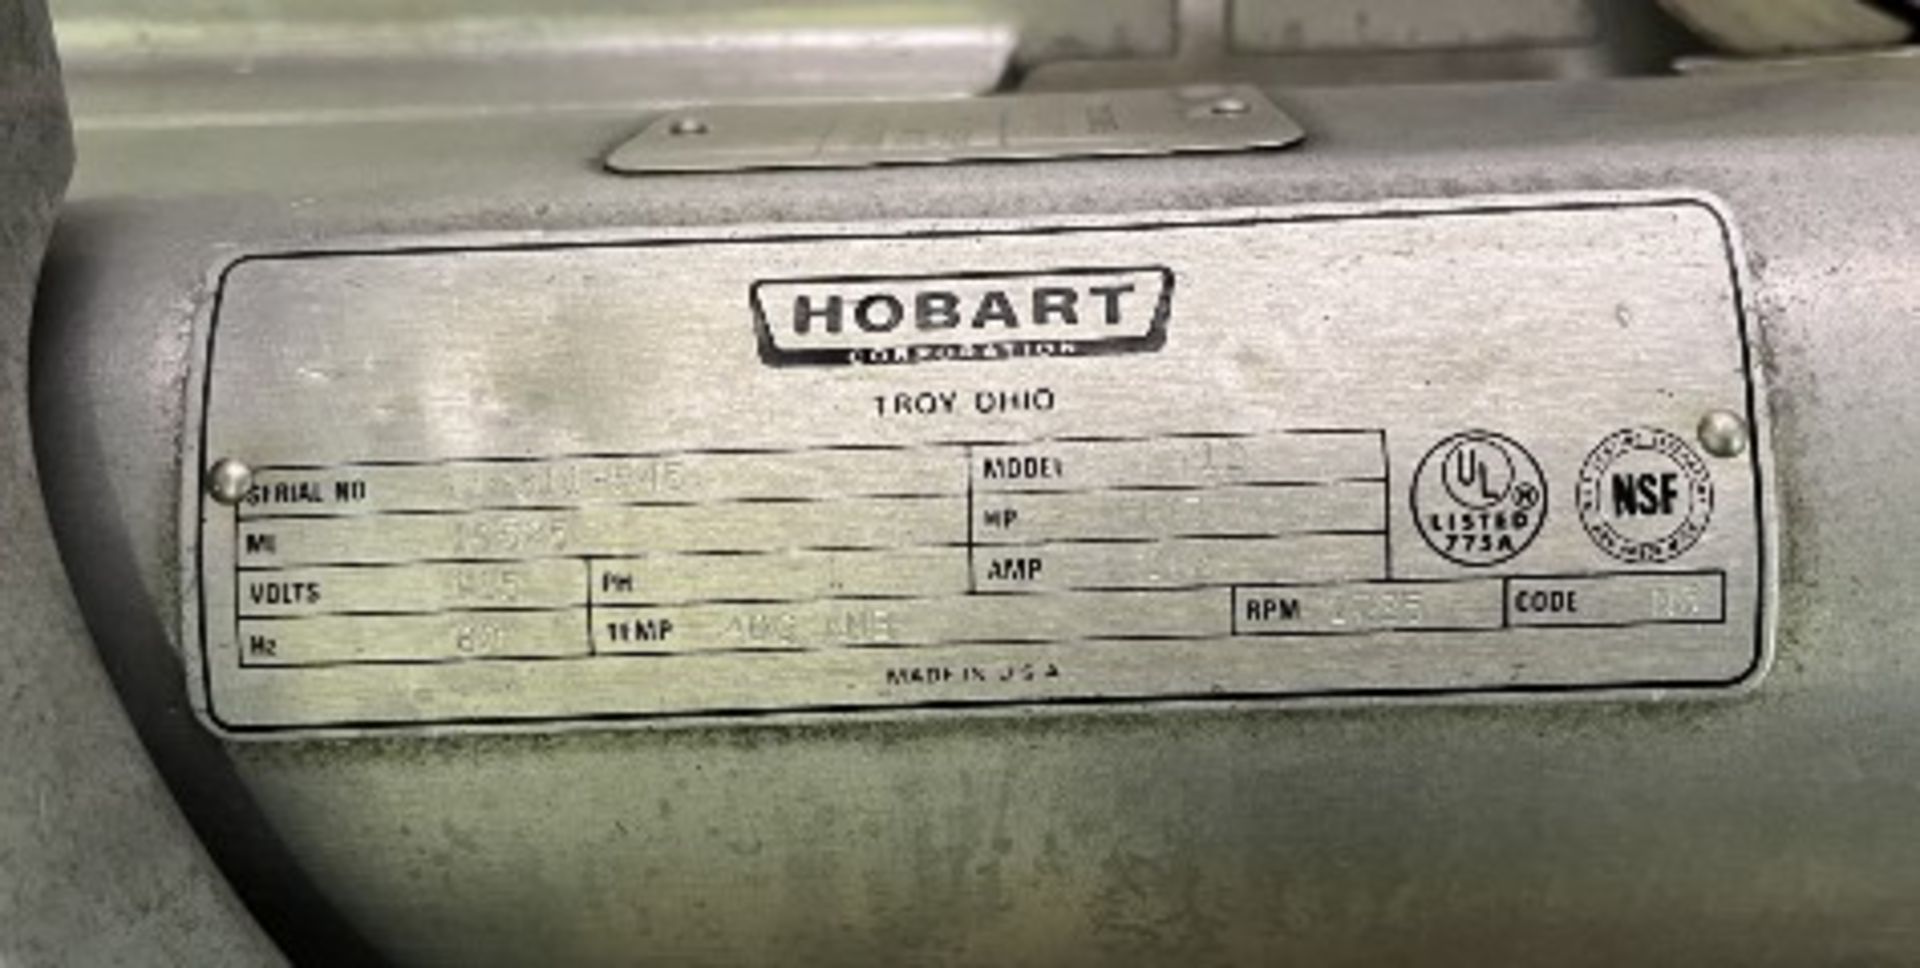 Hobart Table Top Slicer, Model 1712, S/N 11-311-545, Volt 5, HP 1/3 (Loading Fee $100) (Located - Image 3 of 3